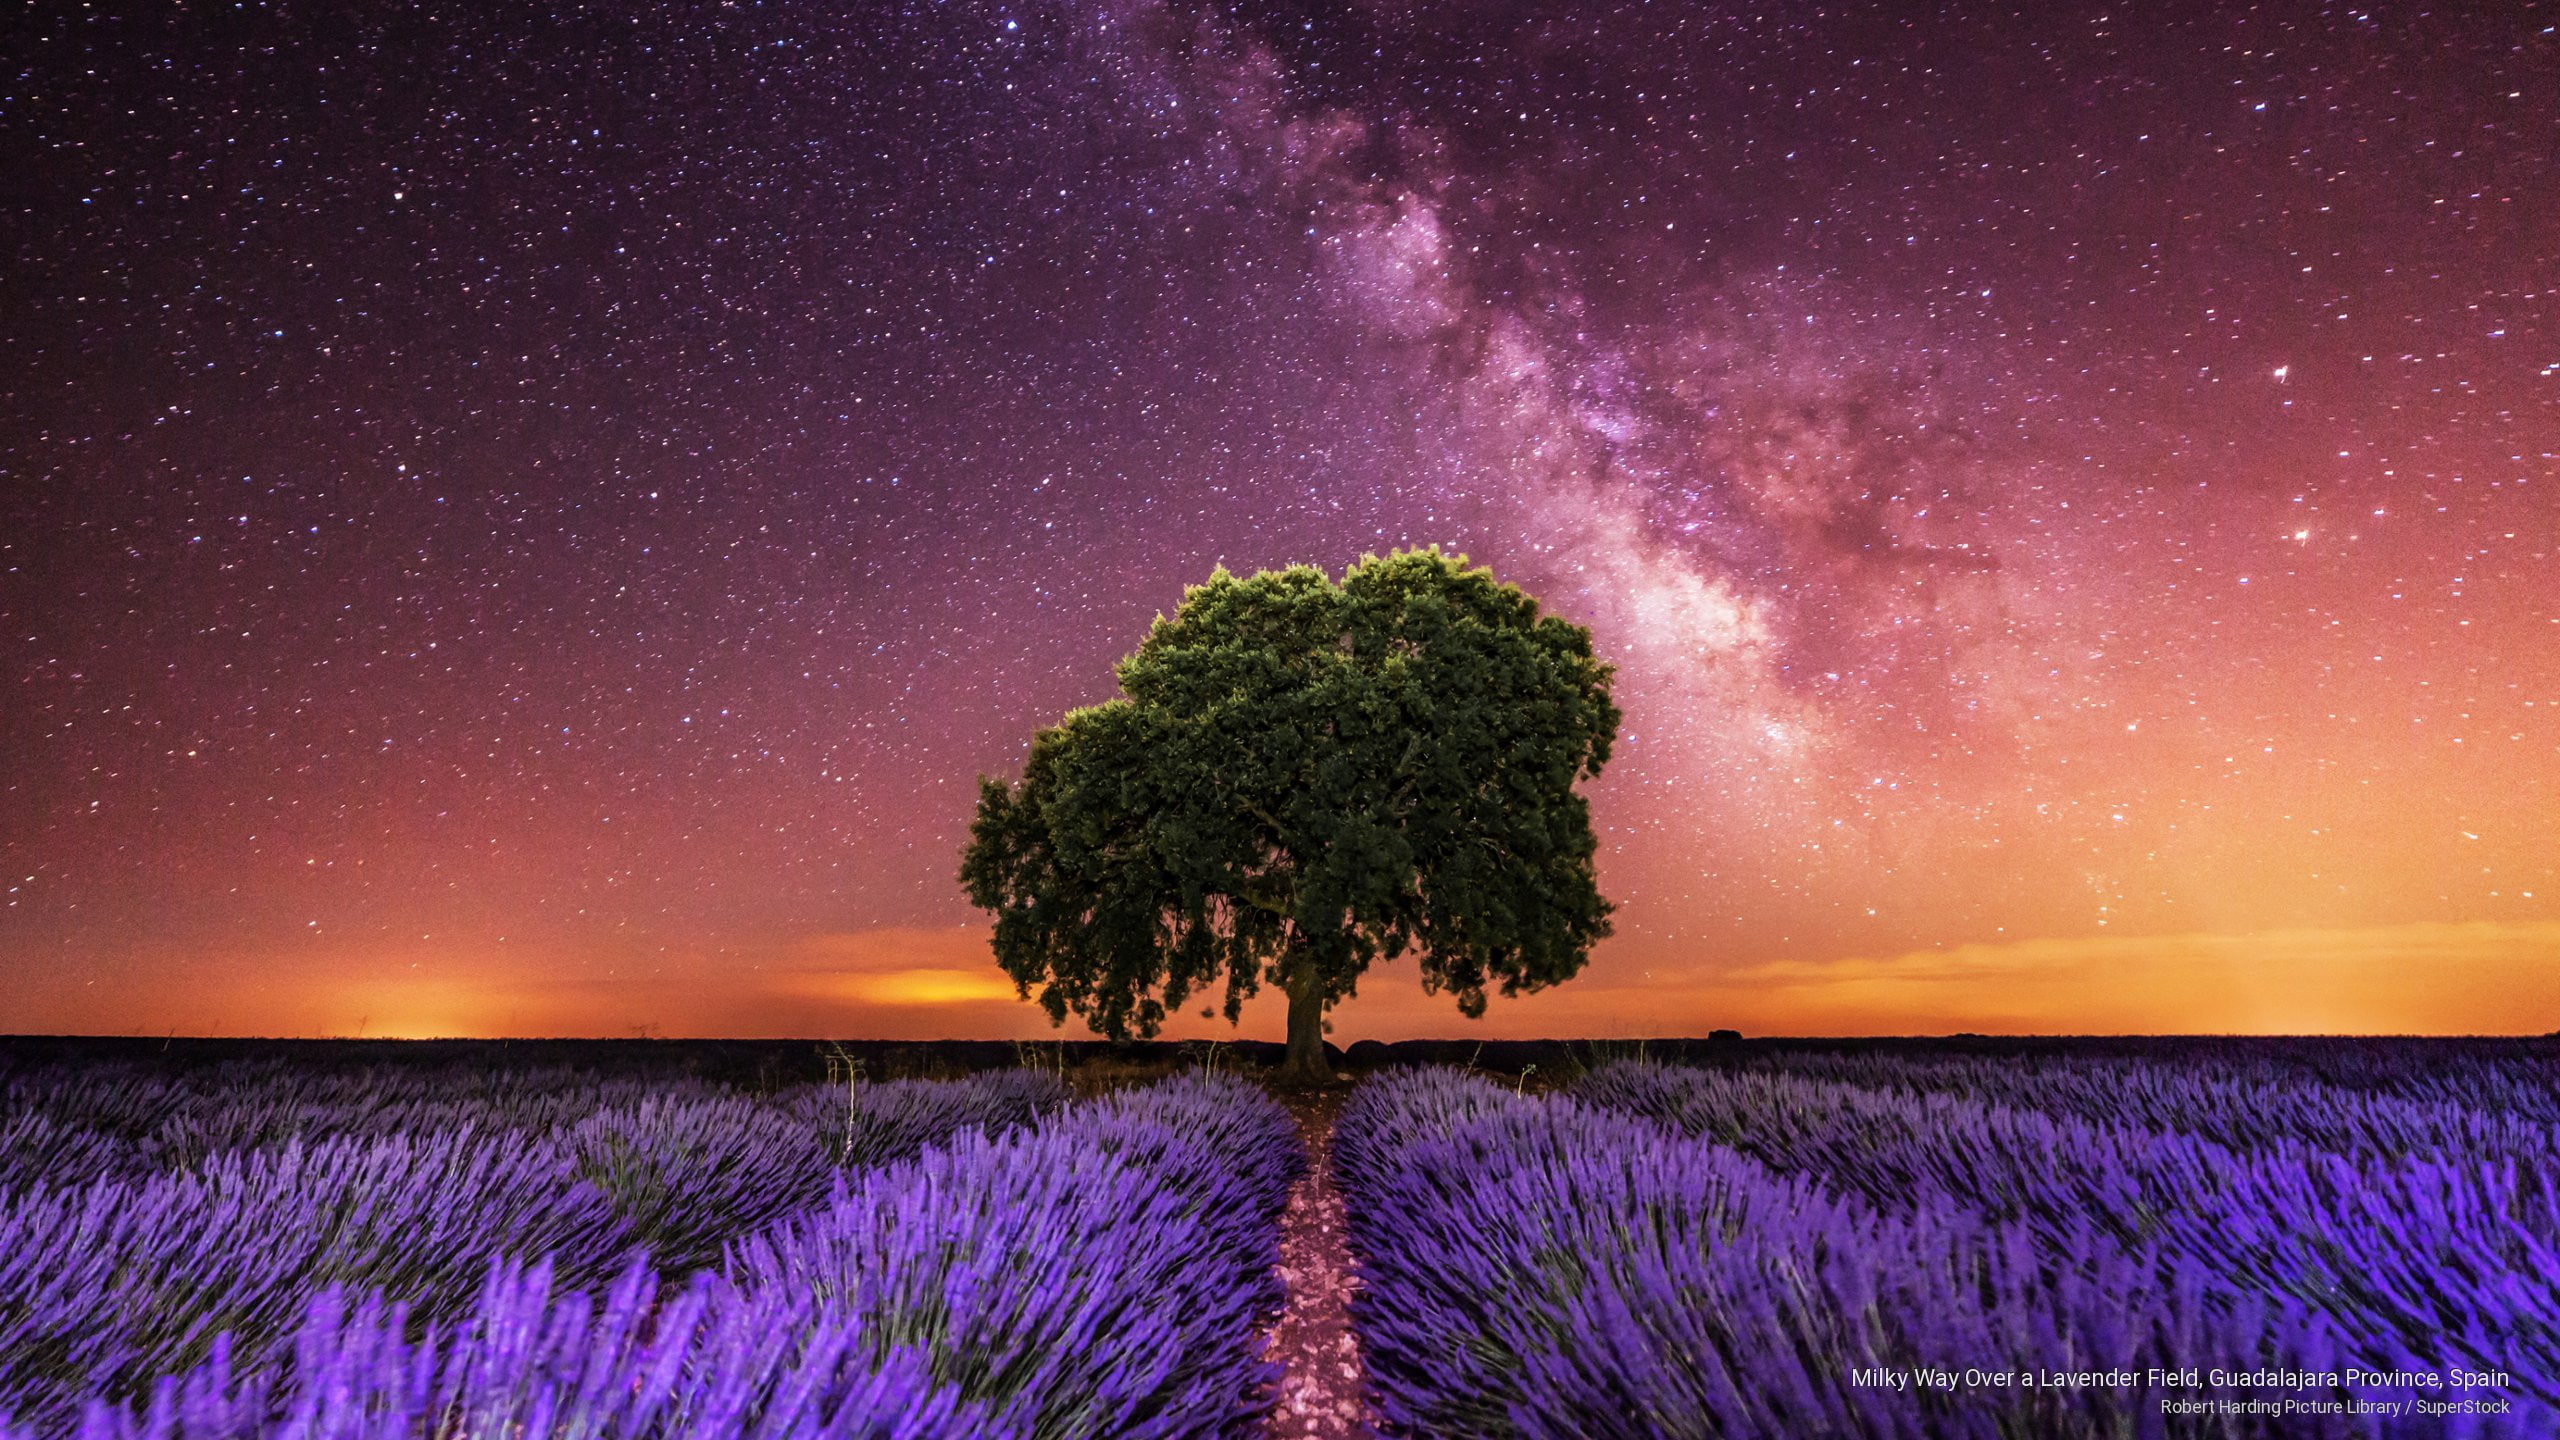 Milky Way Over a Lavender Field, Guadalajara Province, Spain